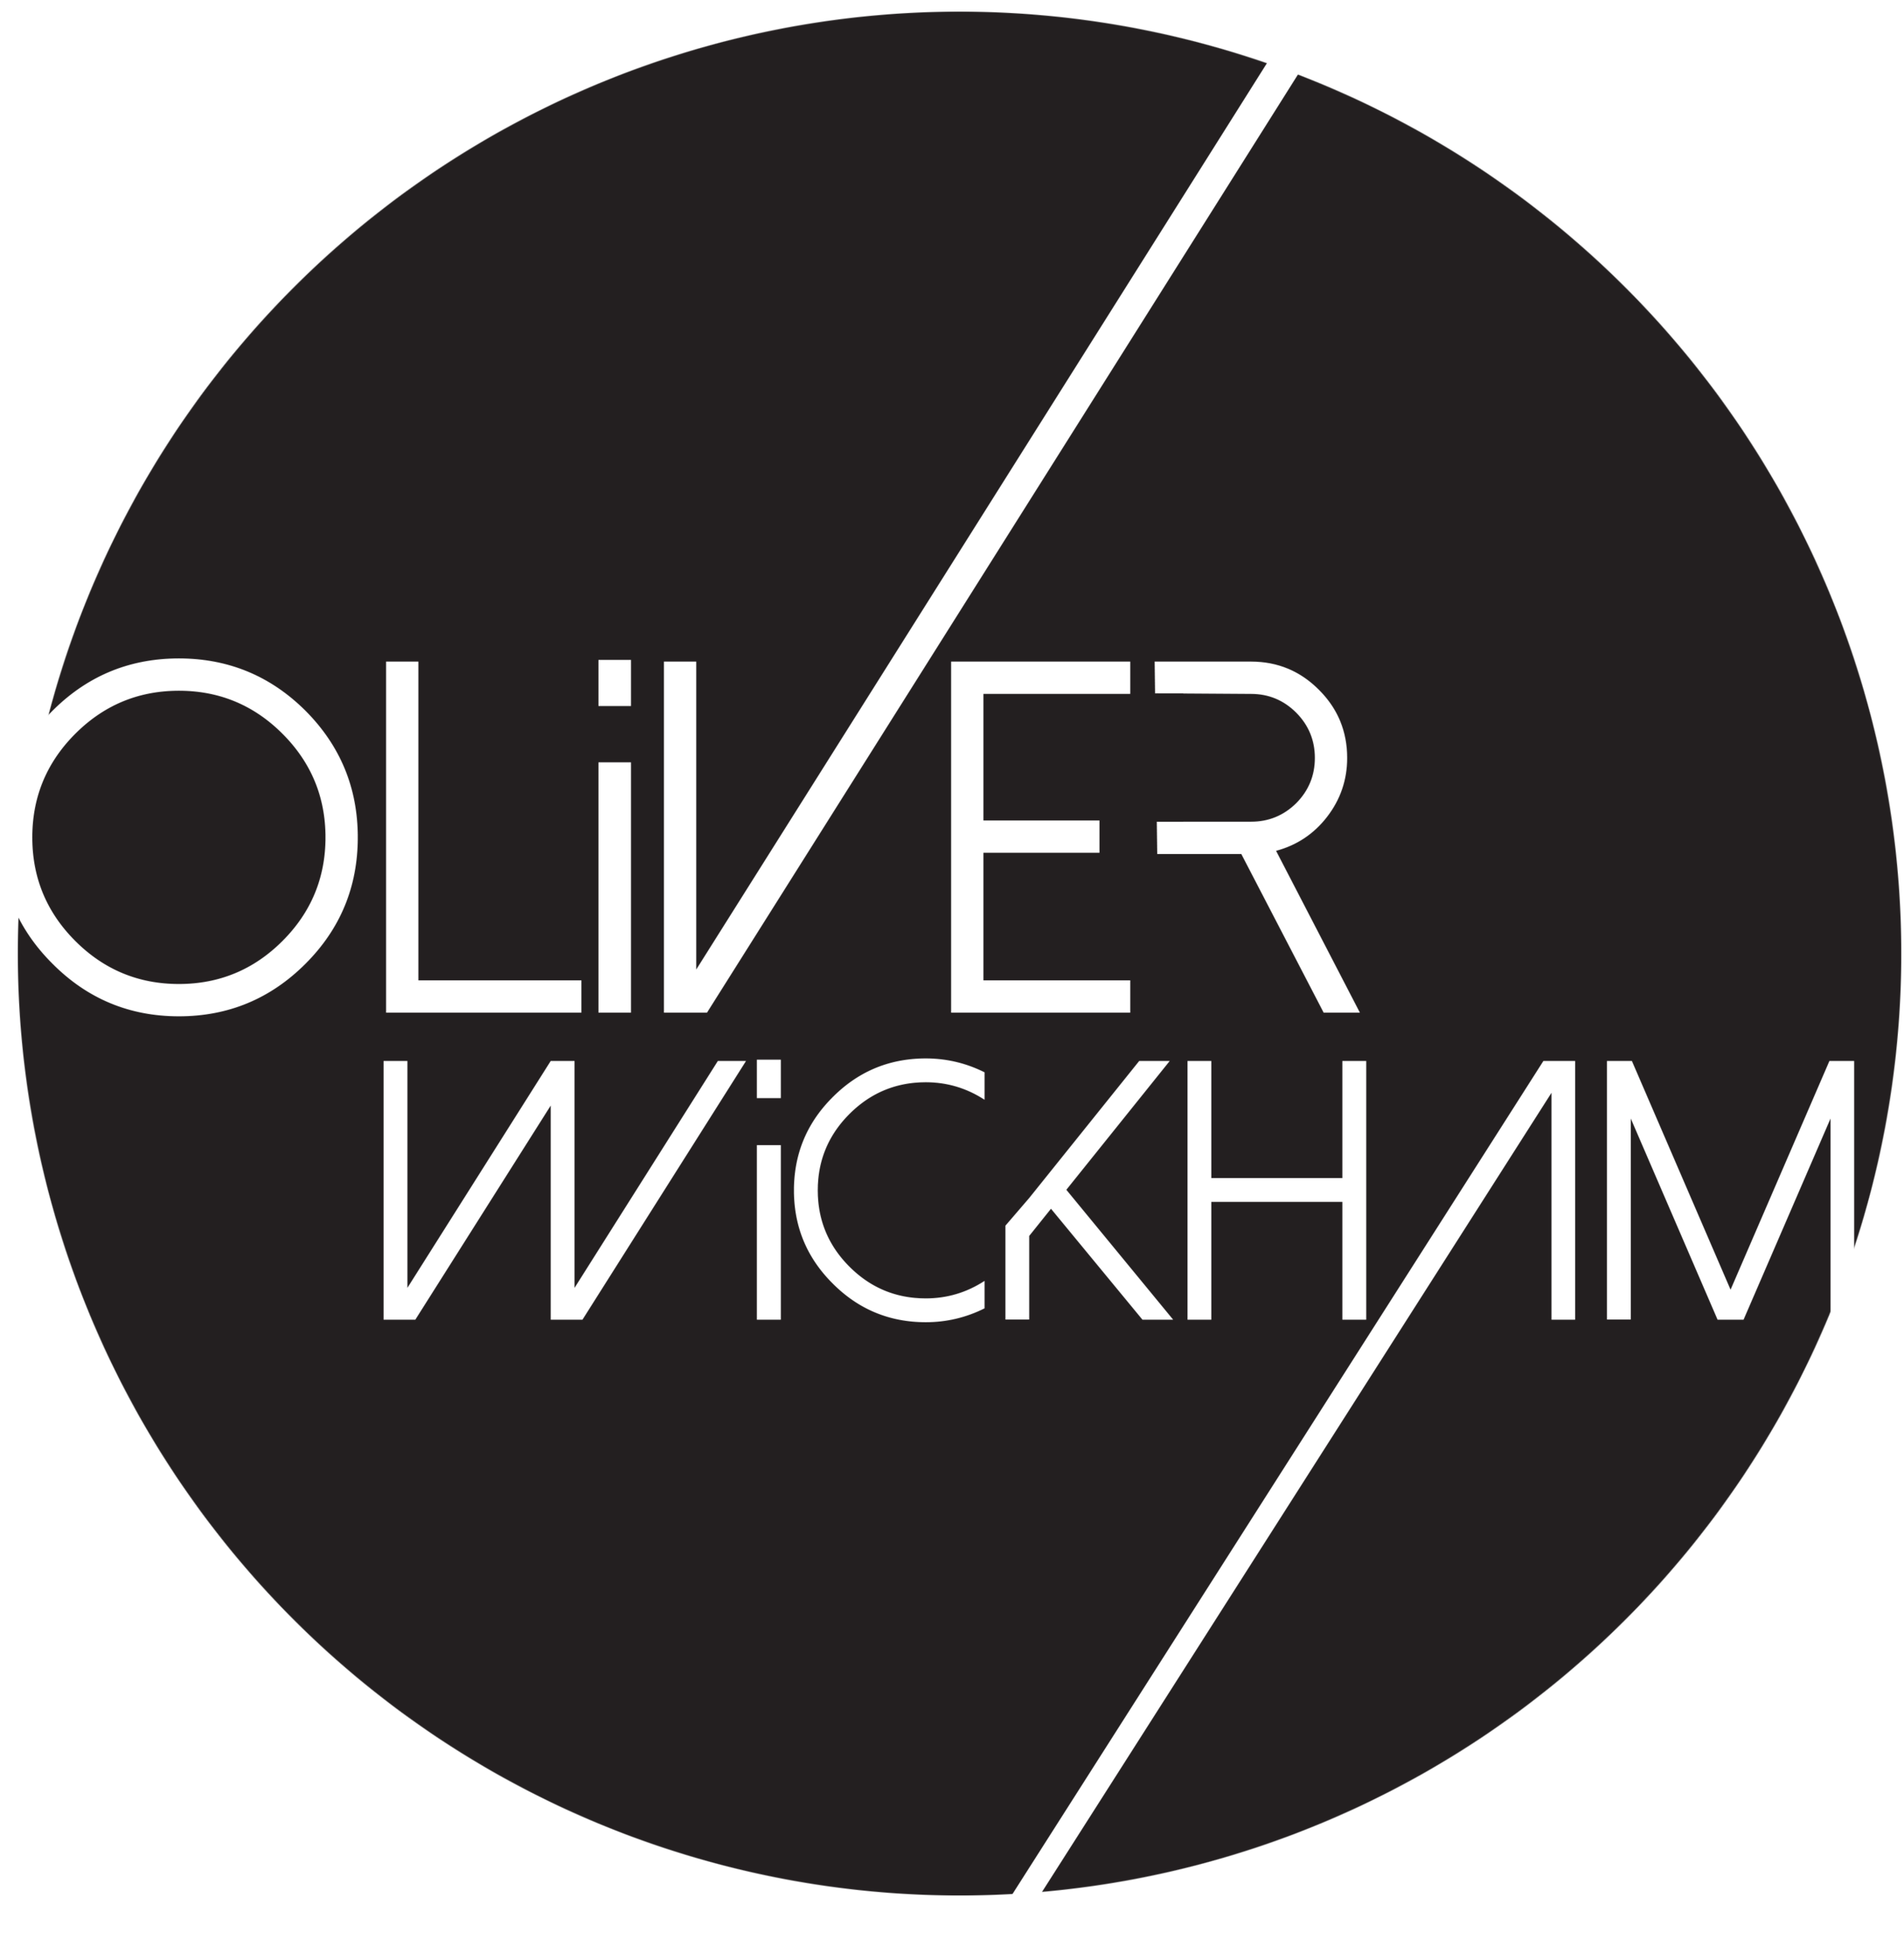 Oliver Wickham